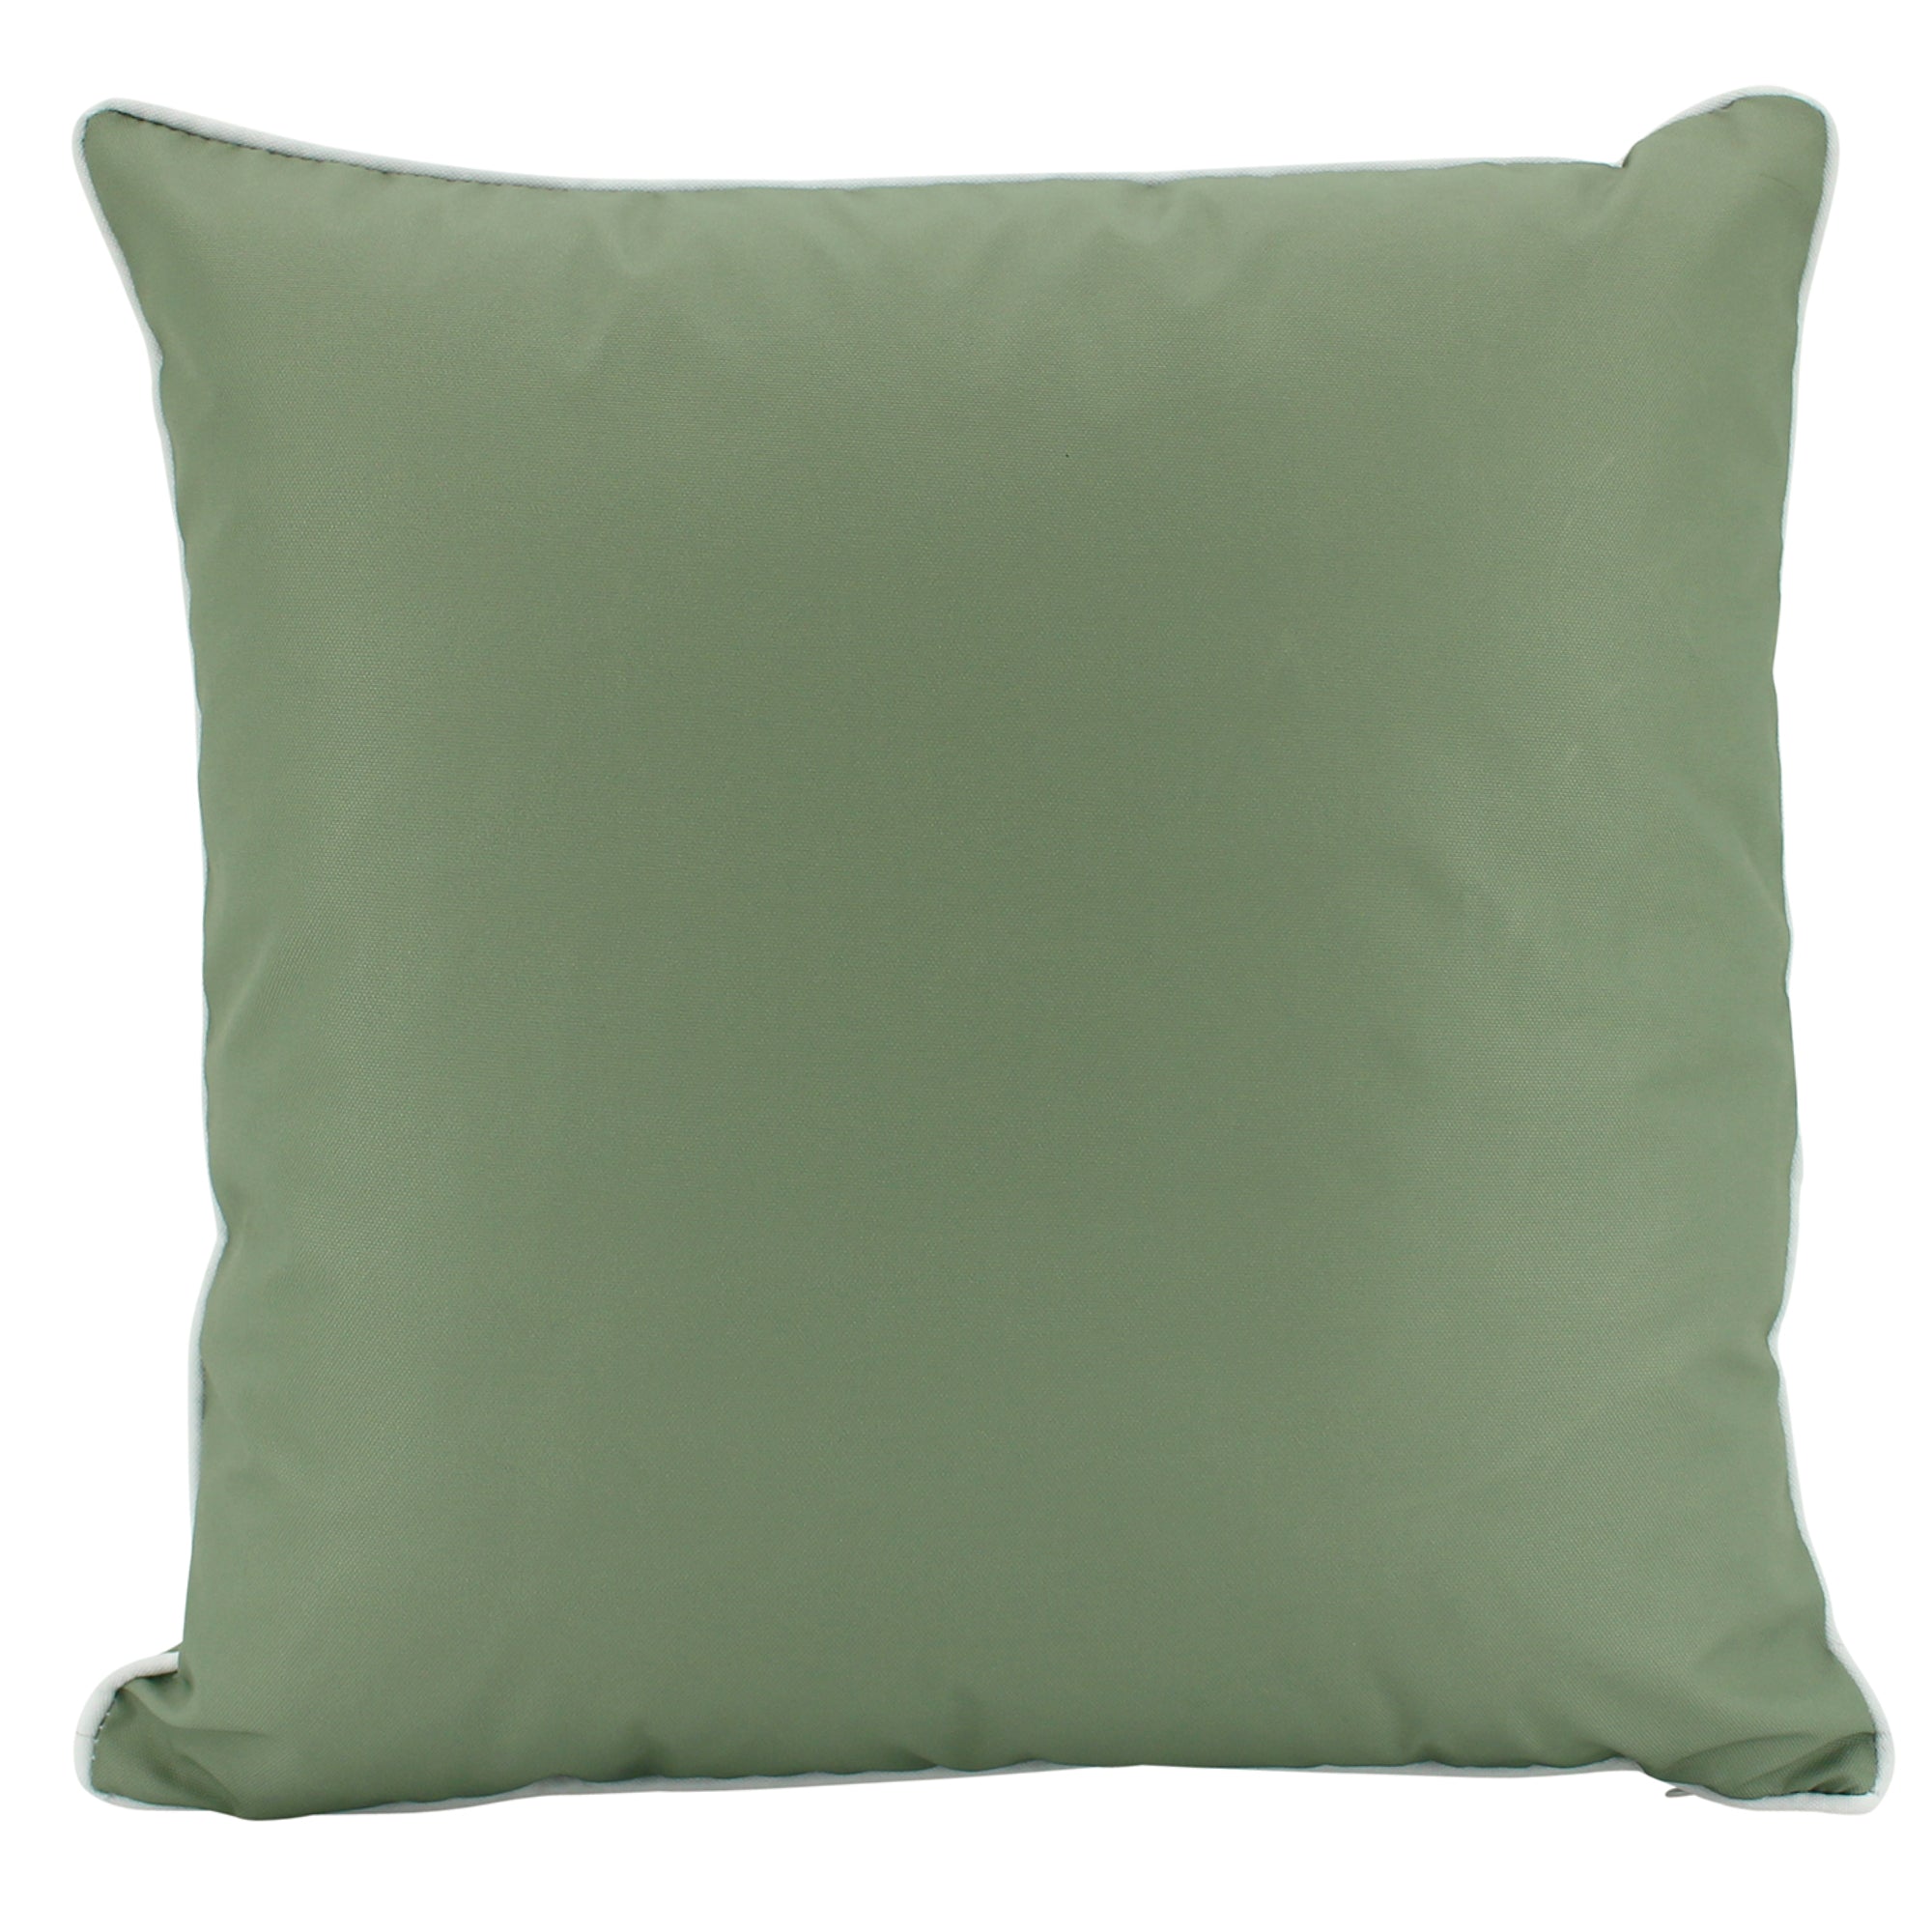 Outdoor Olive Cushion - 50cm x 50cm